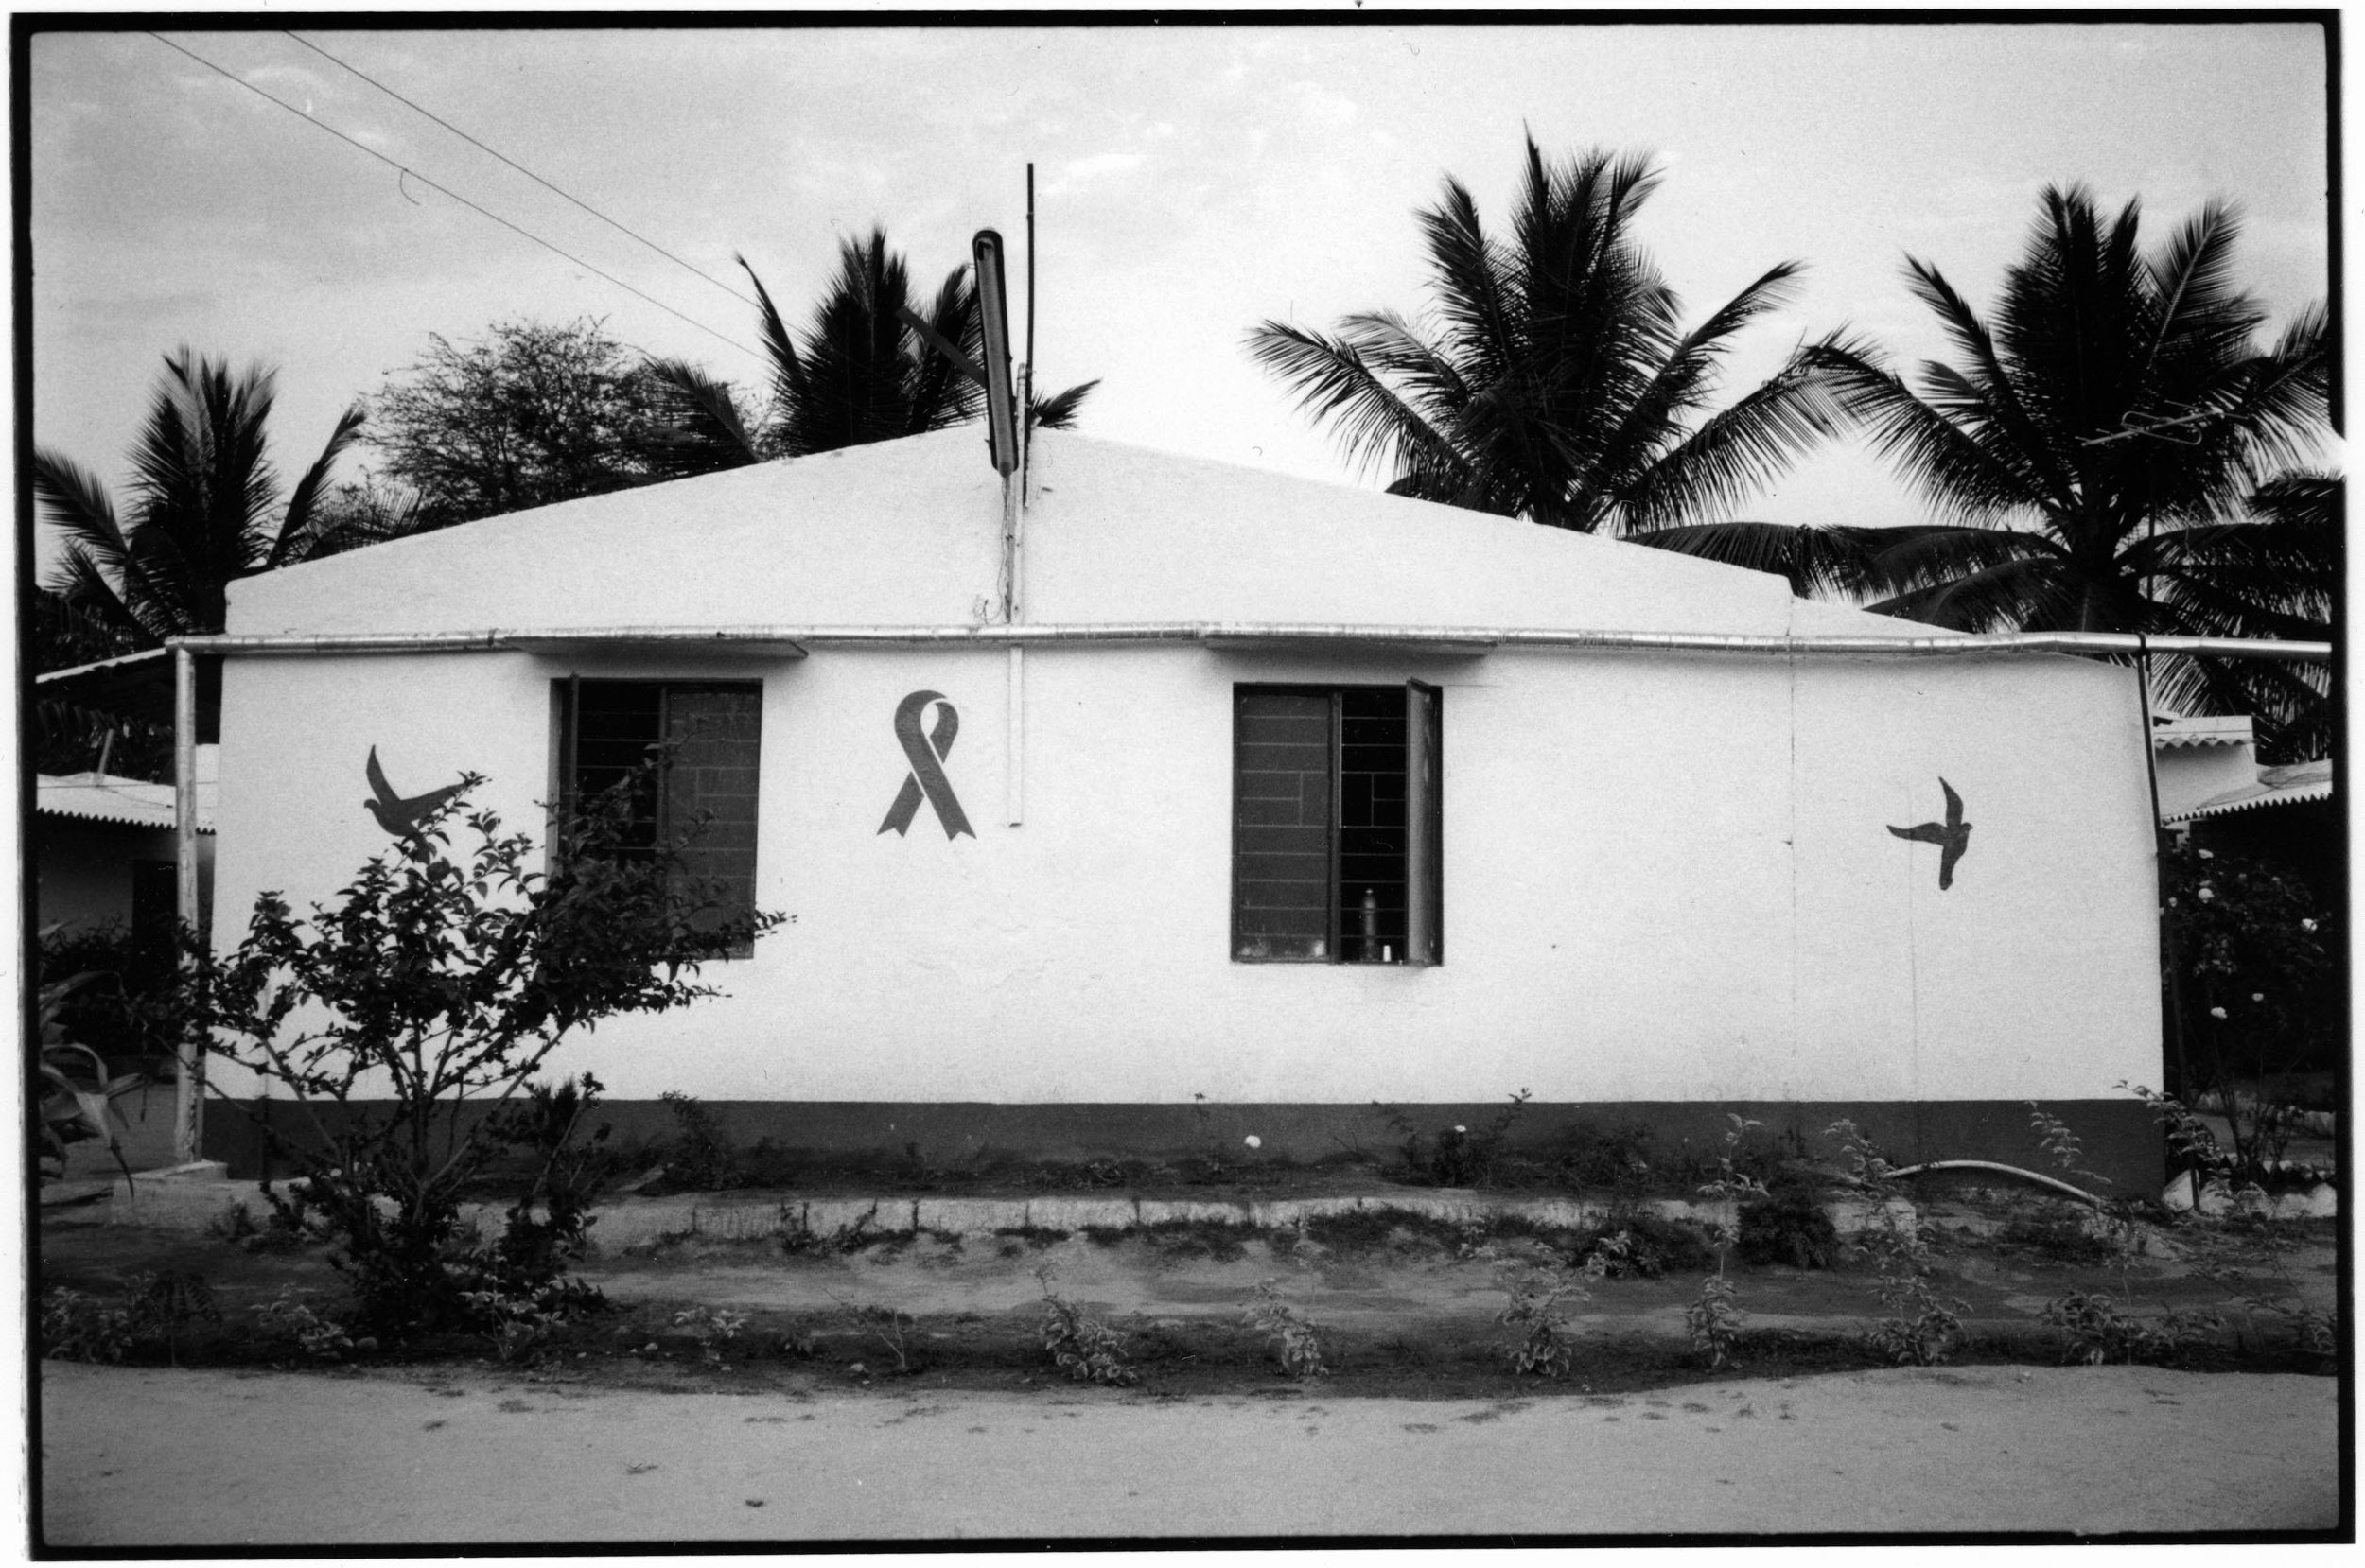 06_freelance photographer_Srinivas Kuruganti_New Delhi_HIV AIDS India.jpg